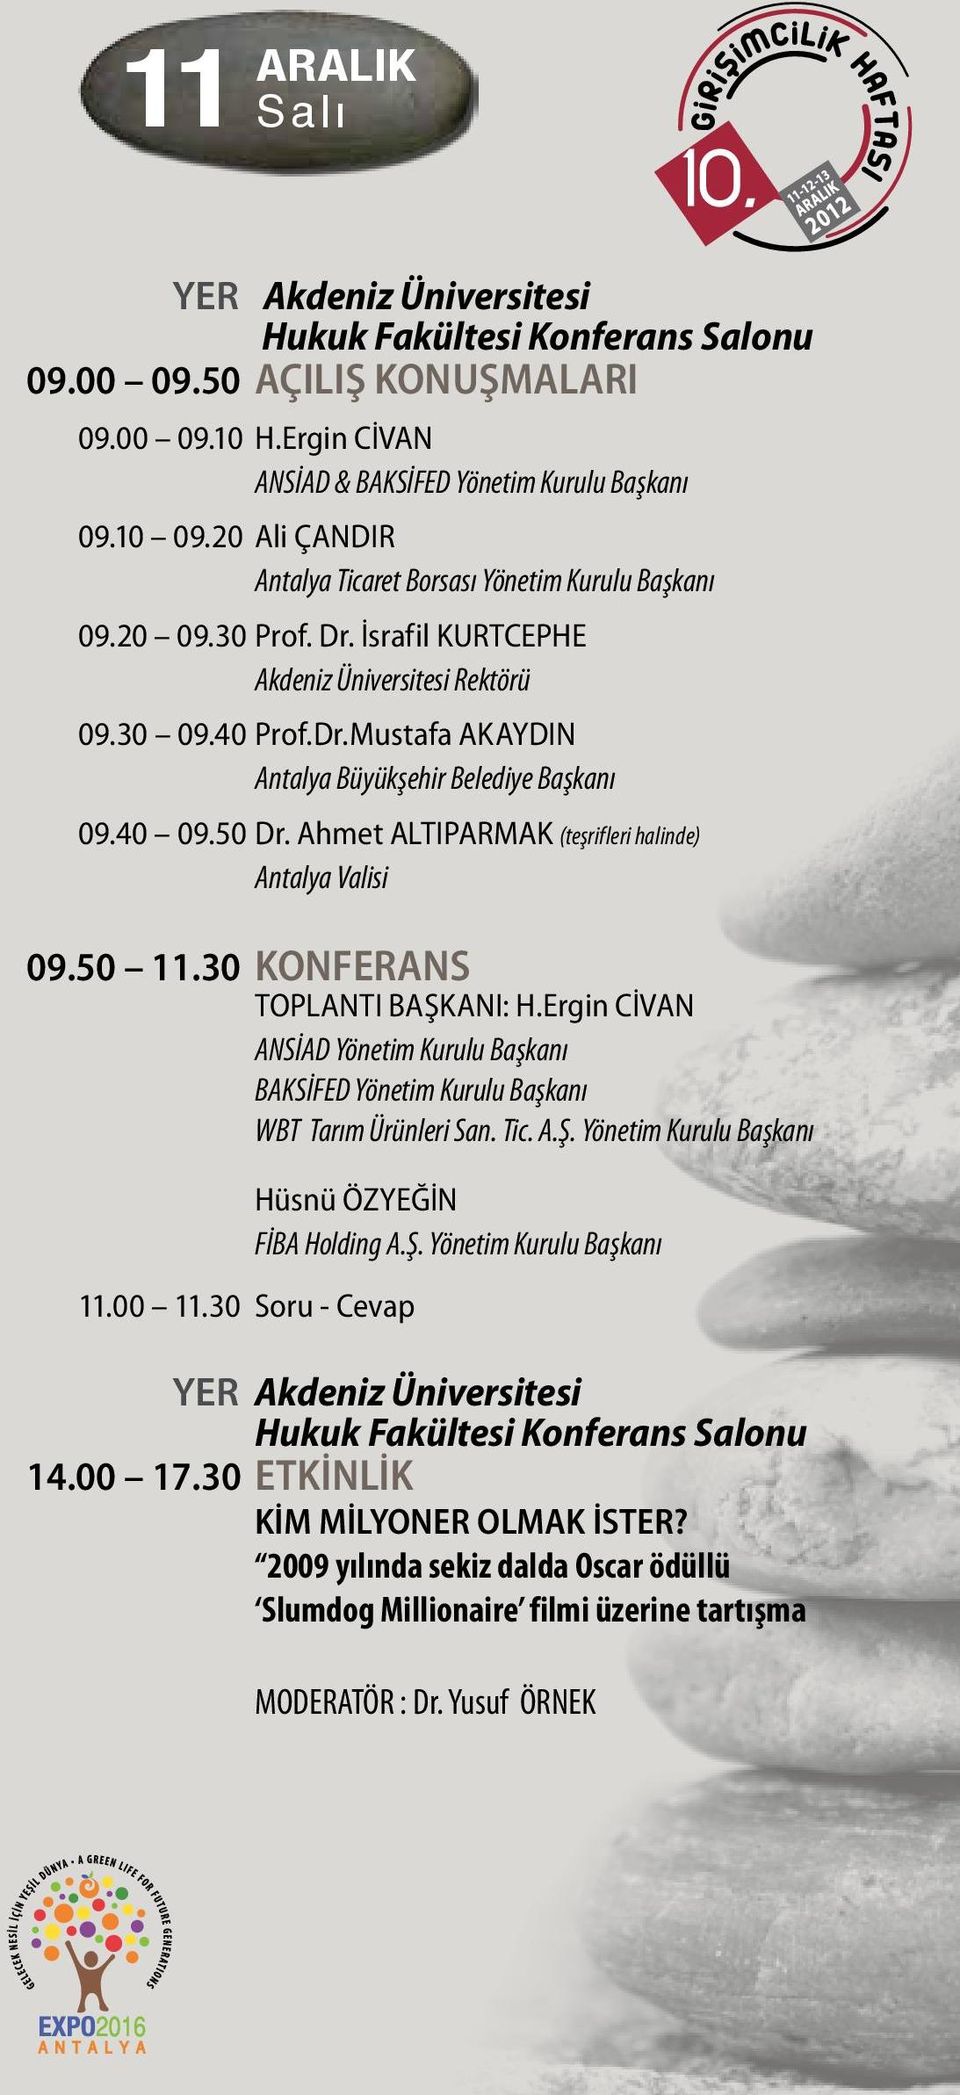 40 09.50 Dr. Ahmet ALTIPARMAK (teşrifleri halinde) Antalya Valisi 09.50 11.30 KONFERANS TOPLANTI BAŞKANI: H.